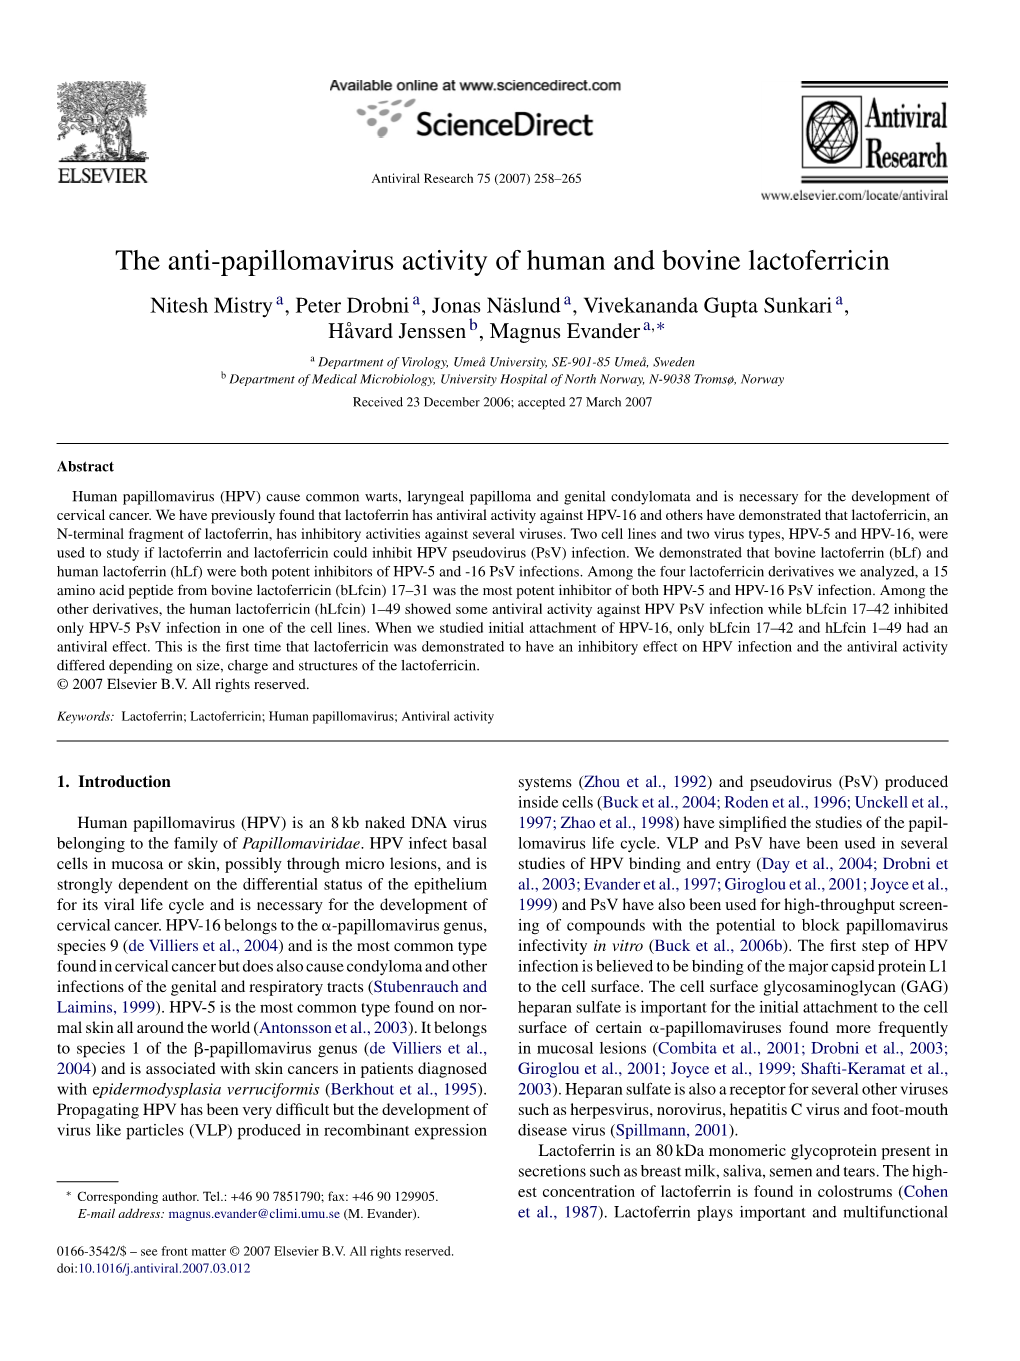 The Anti-Papillomavirus Activity of Human and Bovine Lactoferricin